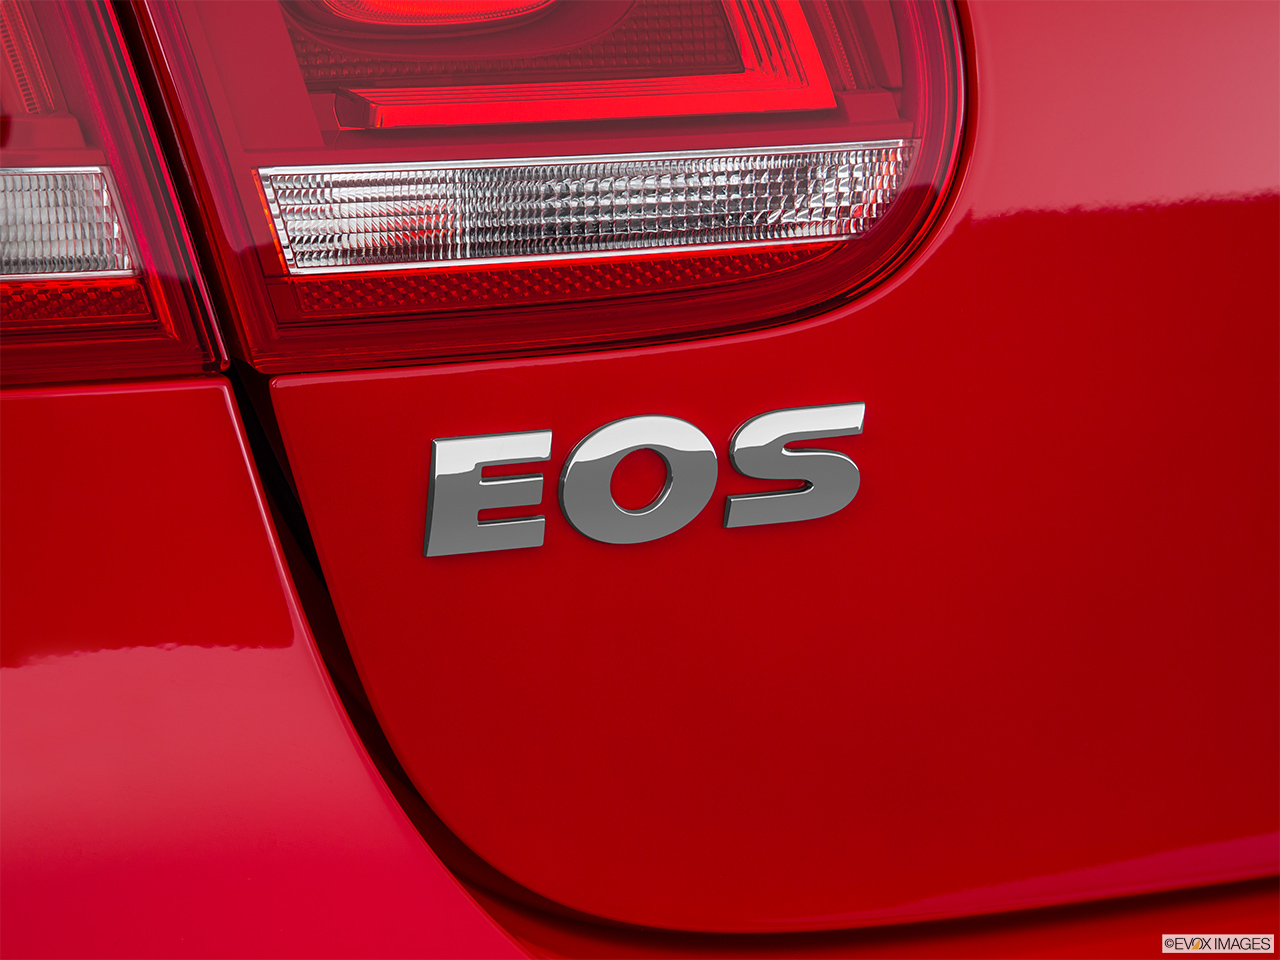 2016 Volkswagen Eos Komfort Edition Rear model badge/emblem 